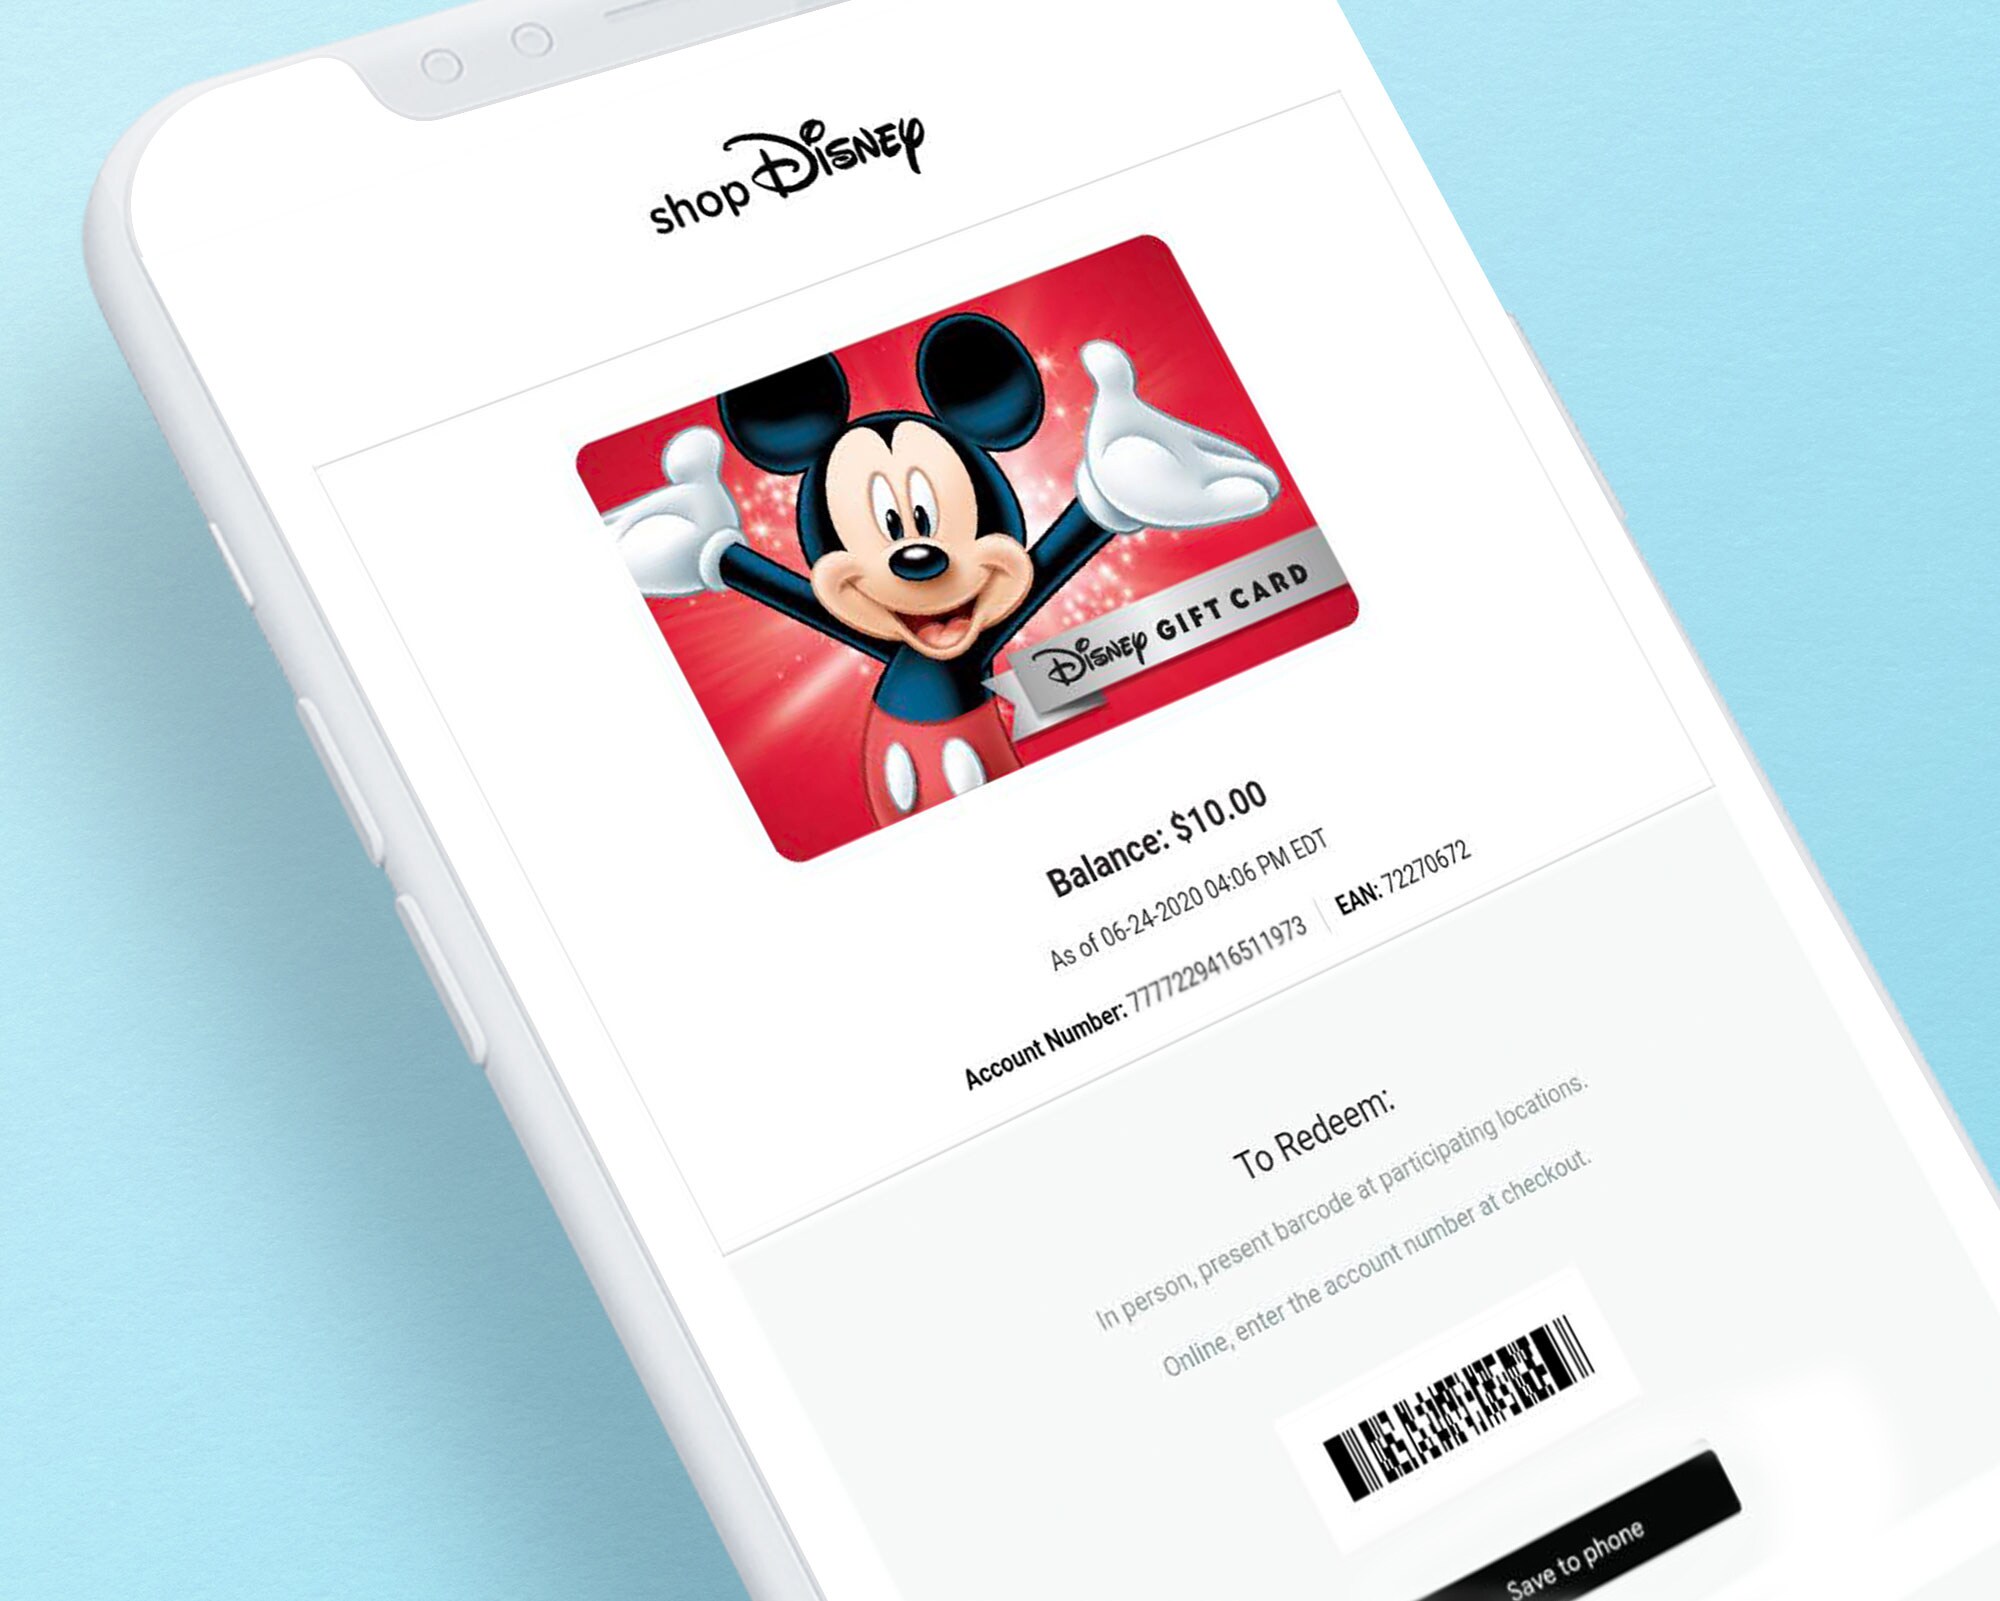 Disney - Disney Gift Card, $15 to $500, Shop